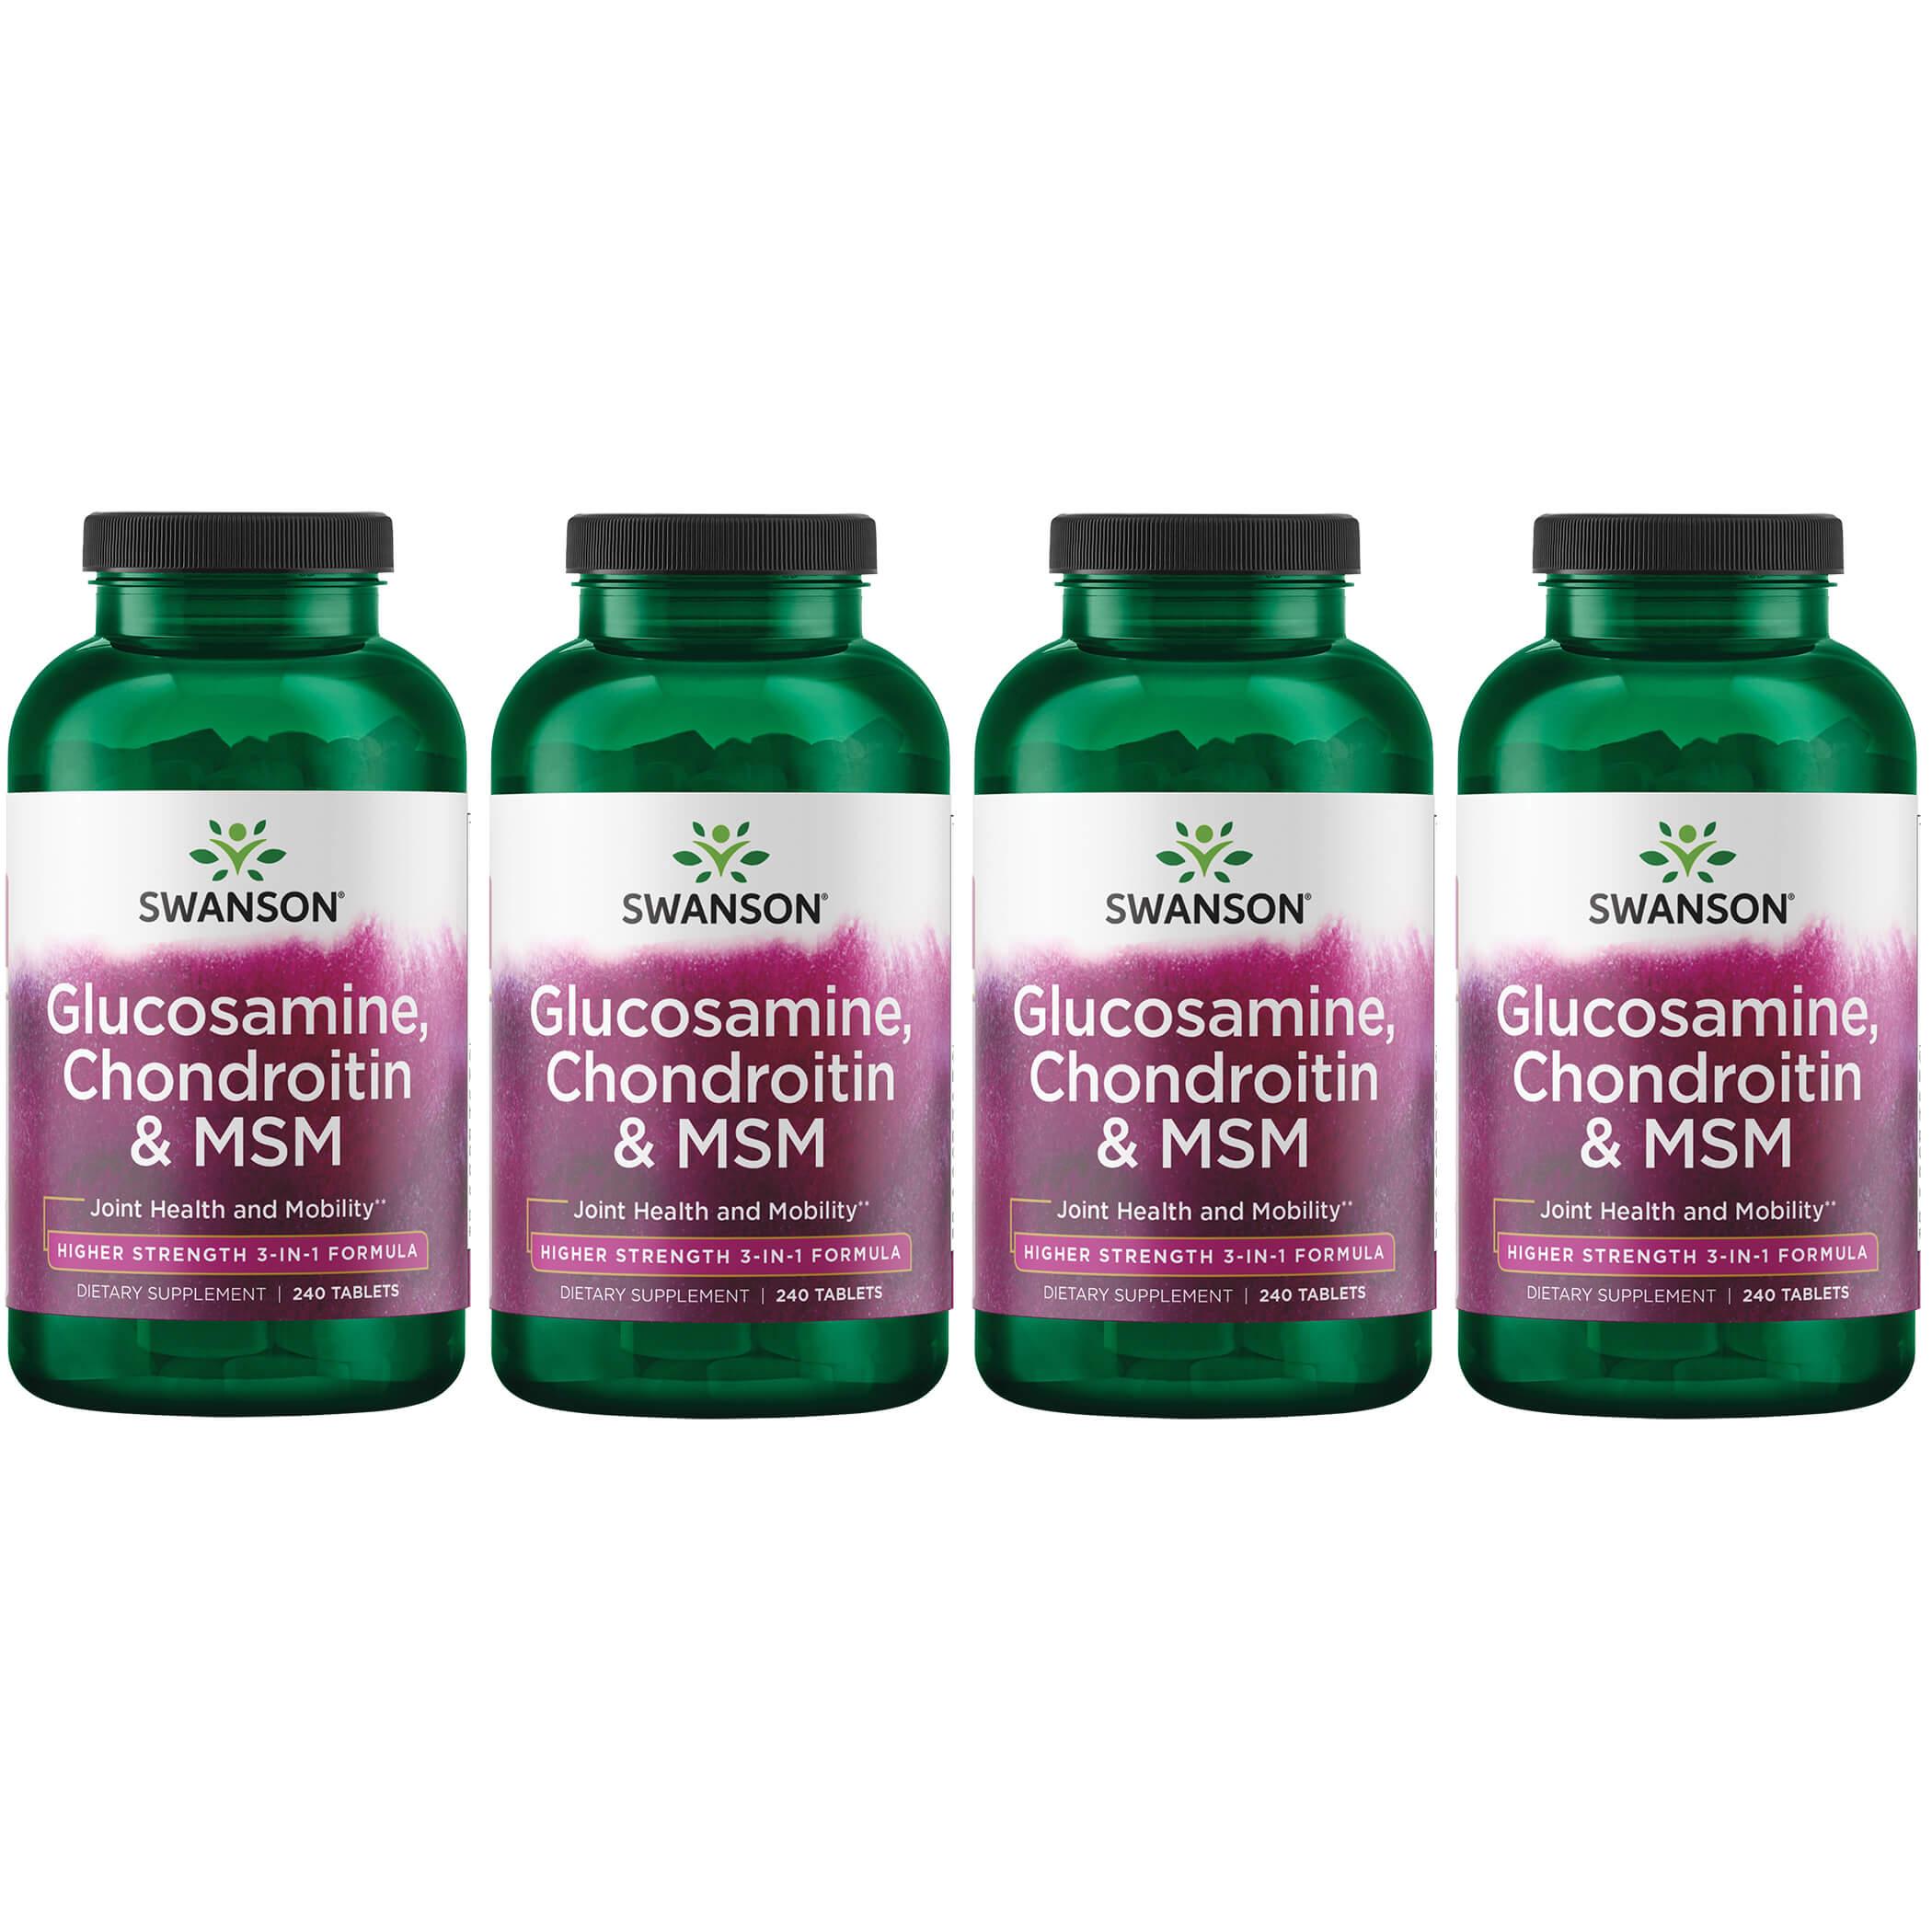 Swanson Premium Glucosamine, Chondroitin & Msm - Higher Strength 4 Pack Supplement Vitamin 240 Tabs